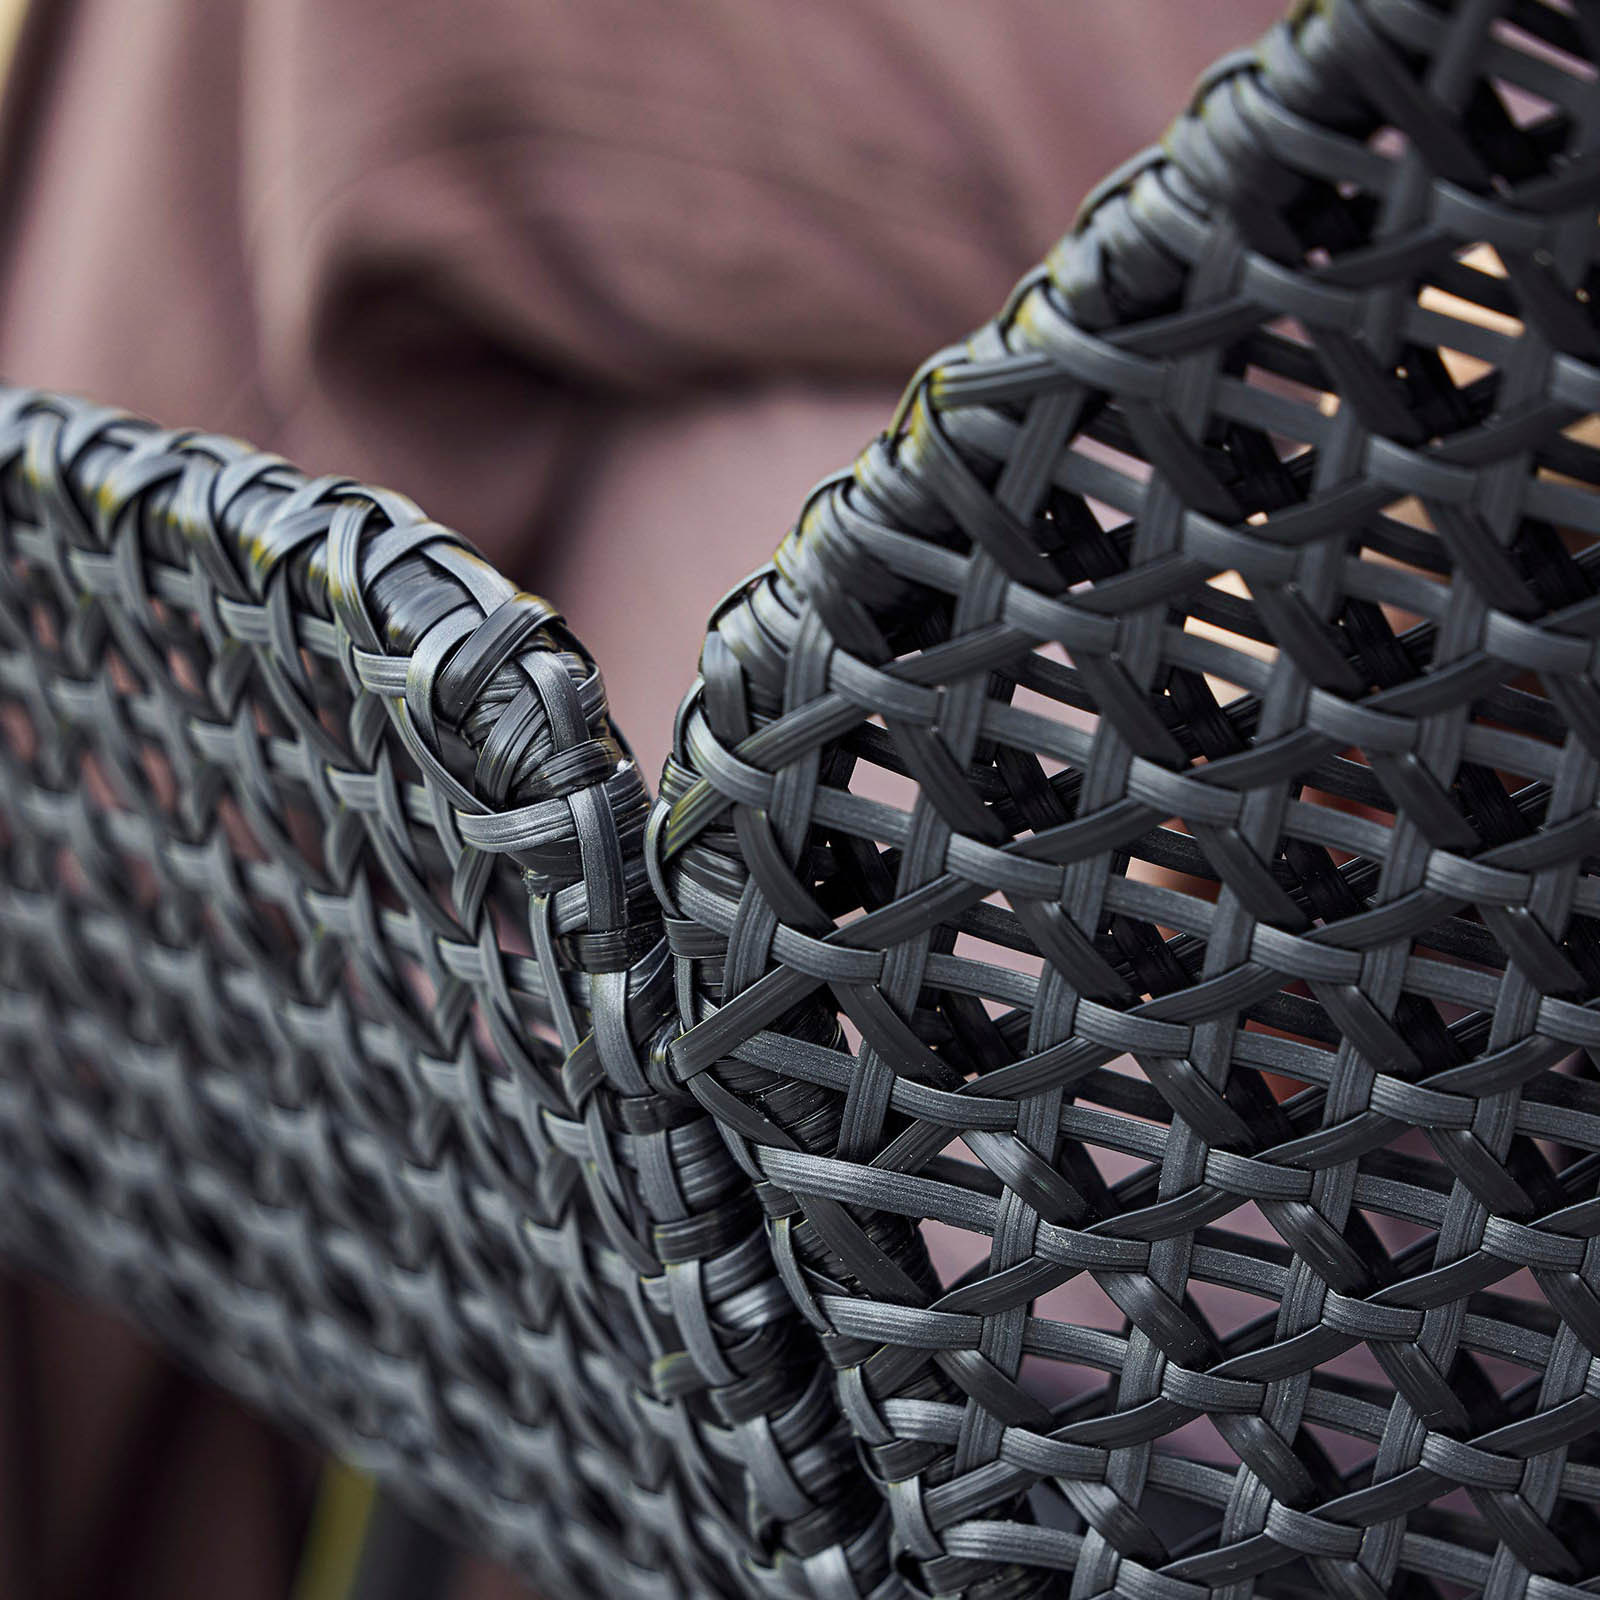 Vibe Hochlehnsessel aus Cane-line Weave in Graphite mit Kissen aus Cane-line Wove in Dark Bordeaux